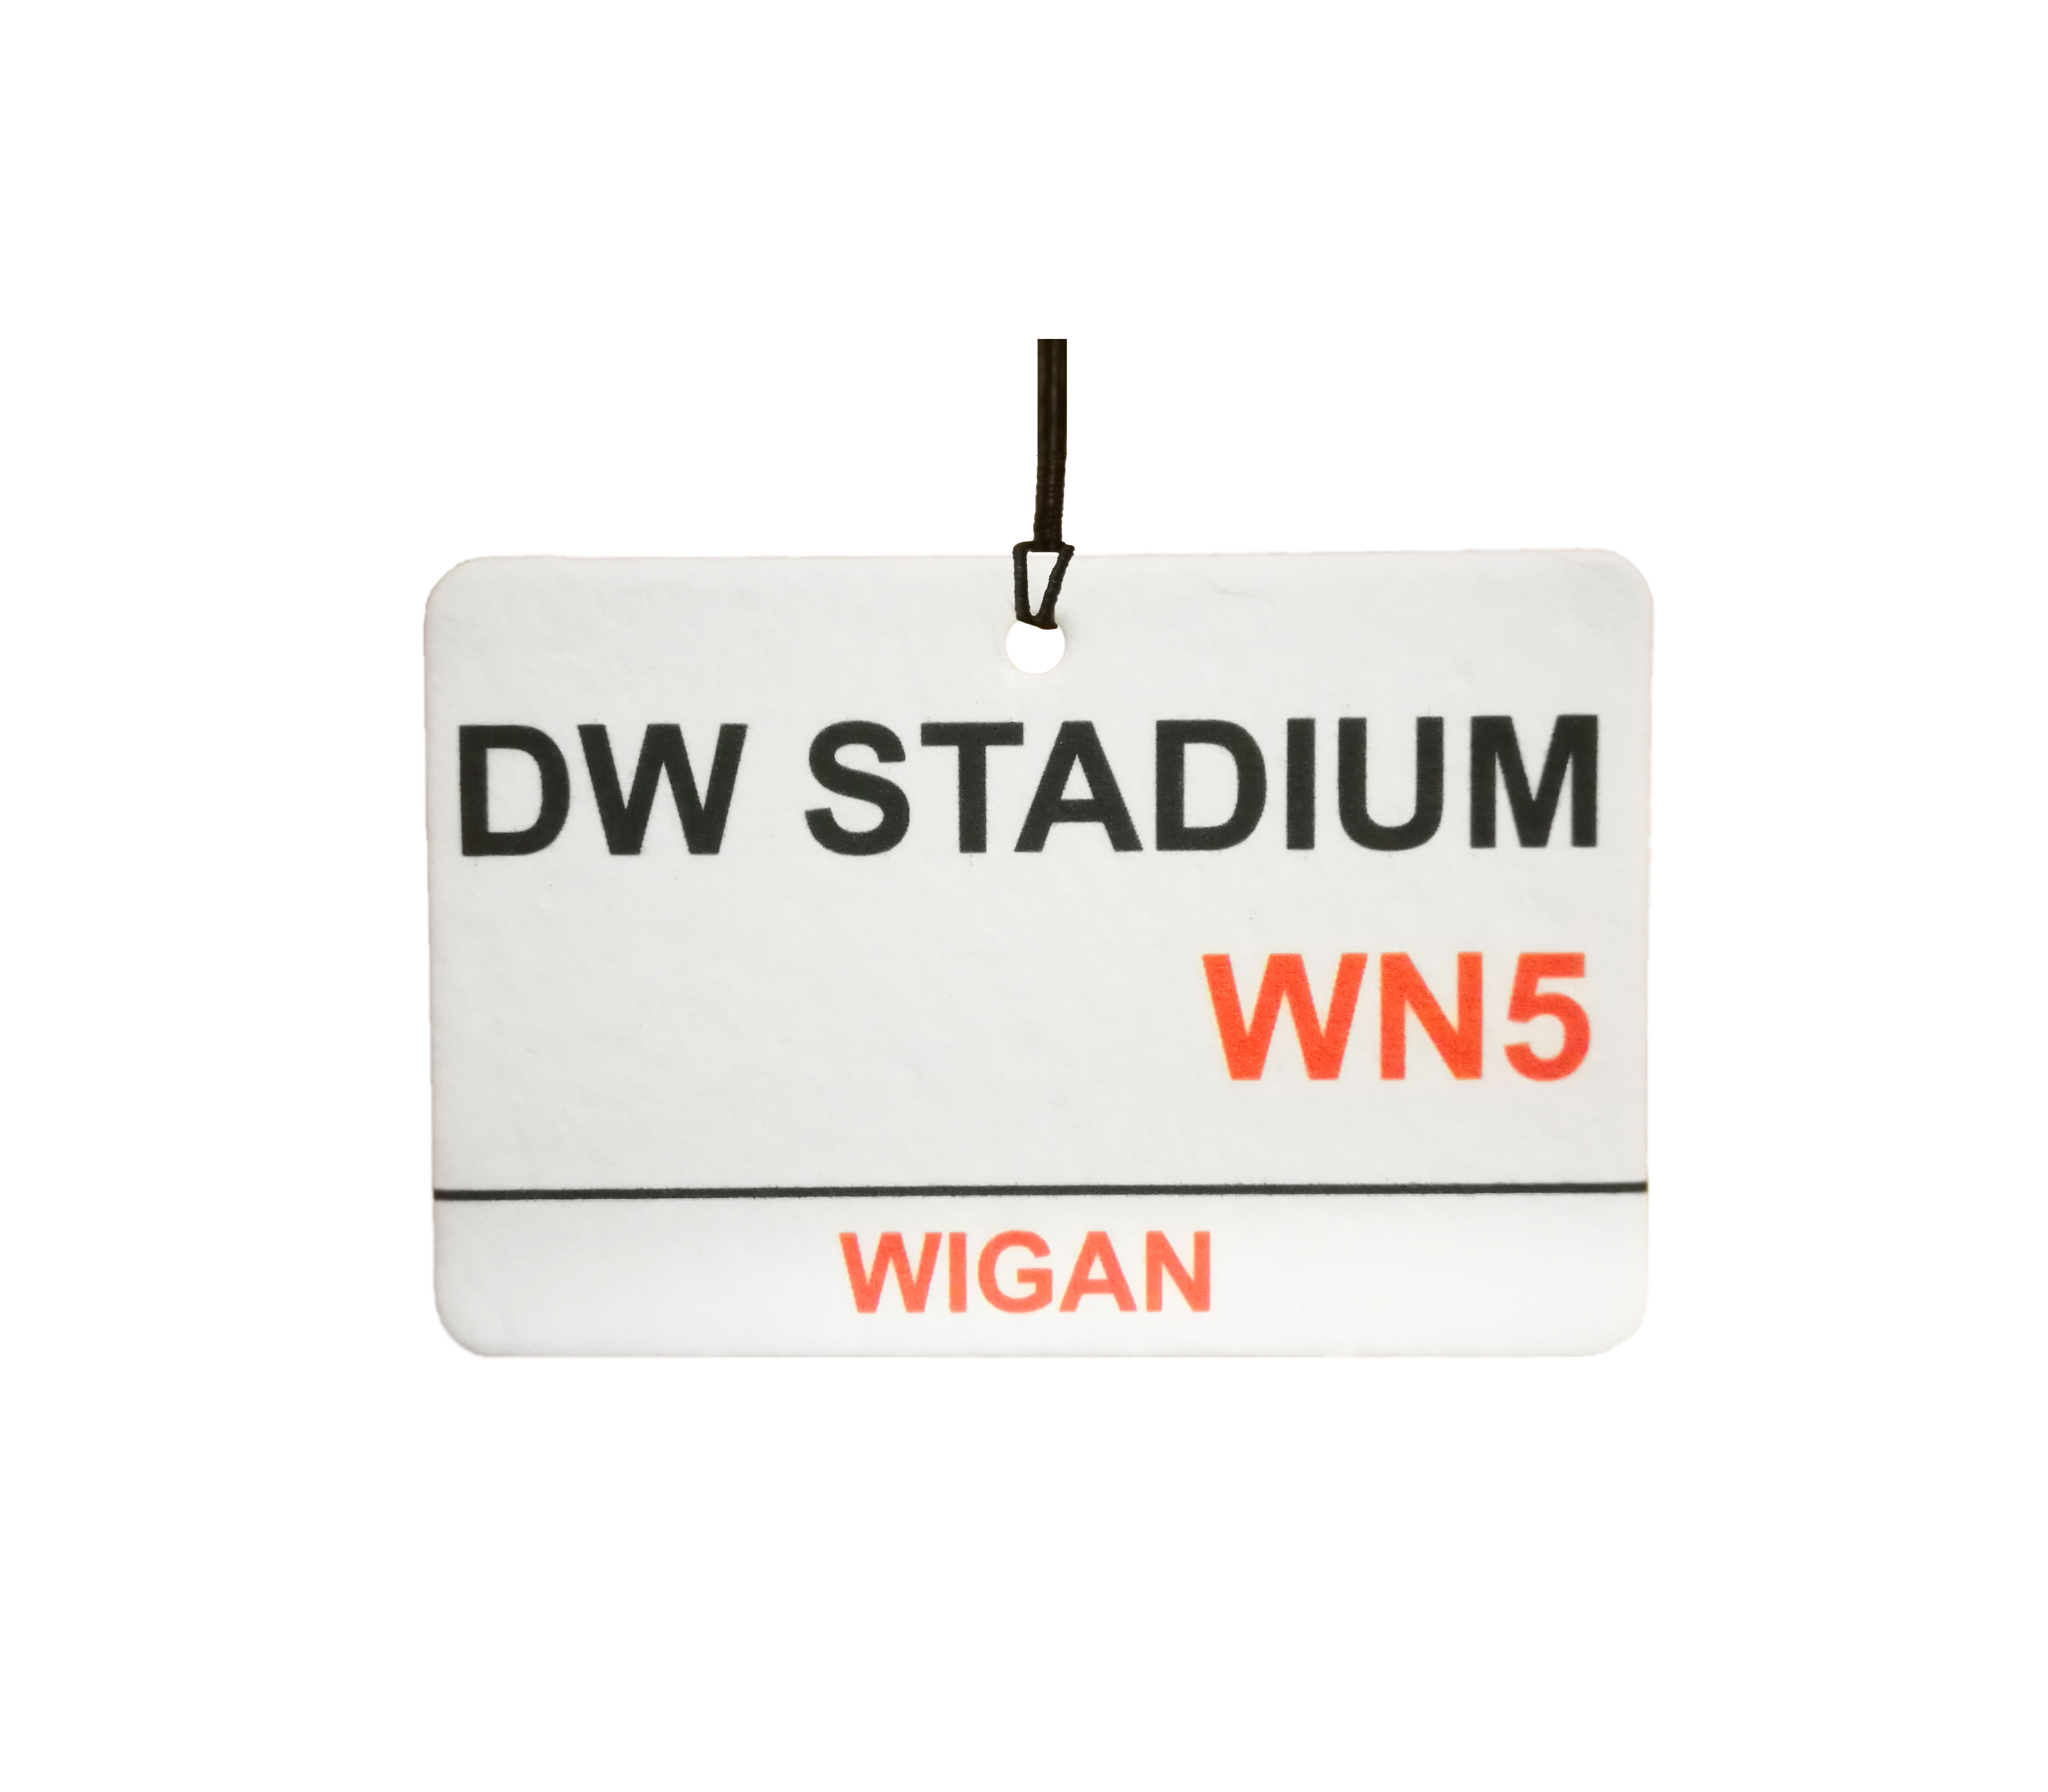 Wigan / Dw Stadium Street Sign